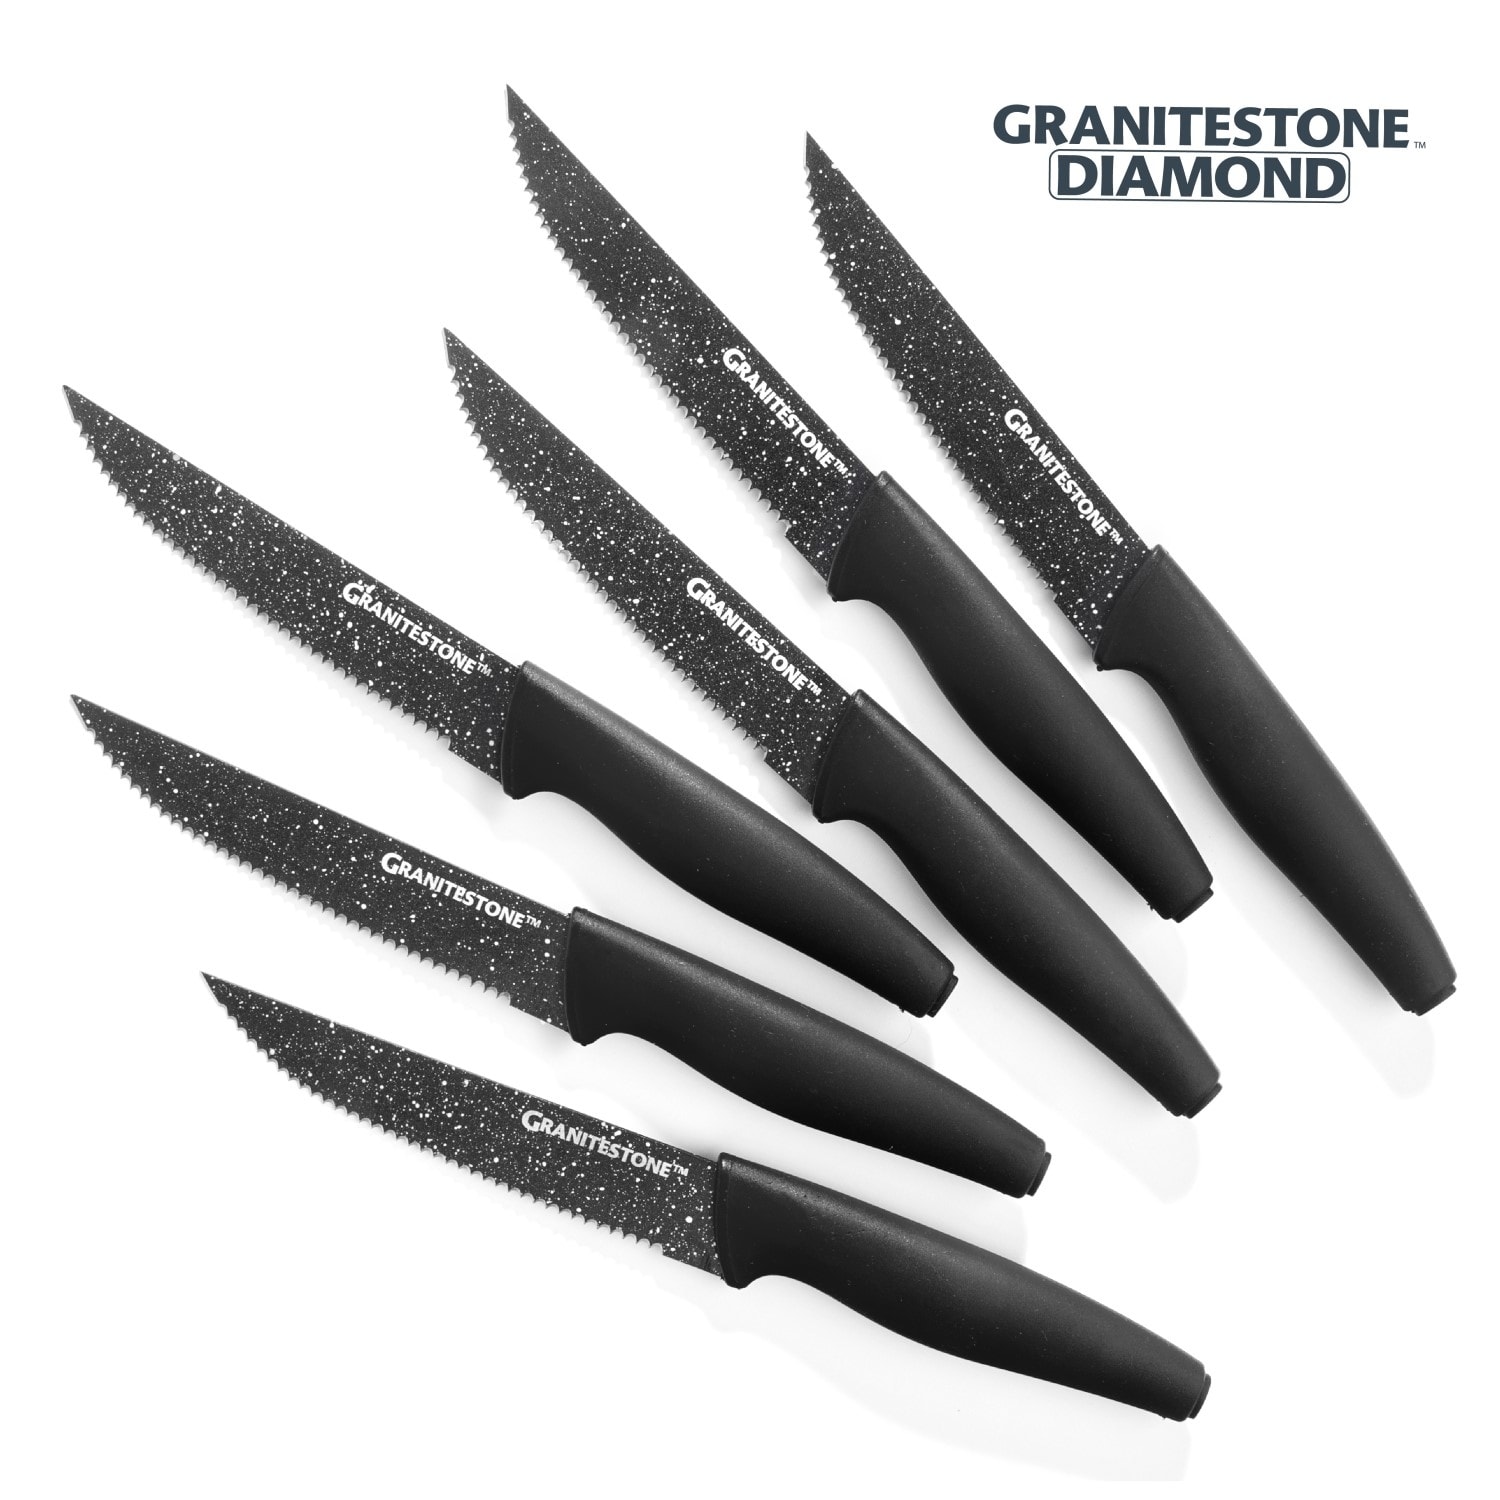 12 pc Granitestone Nutriblade Knife Set